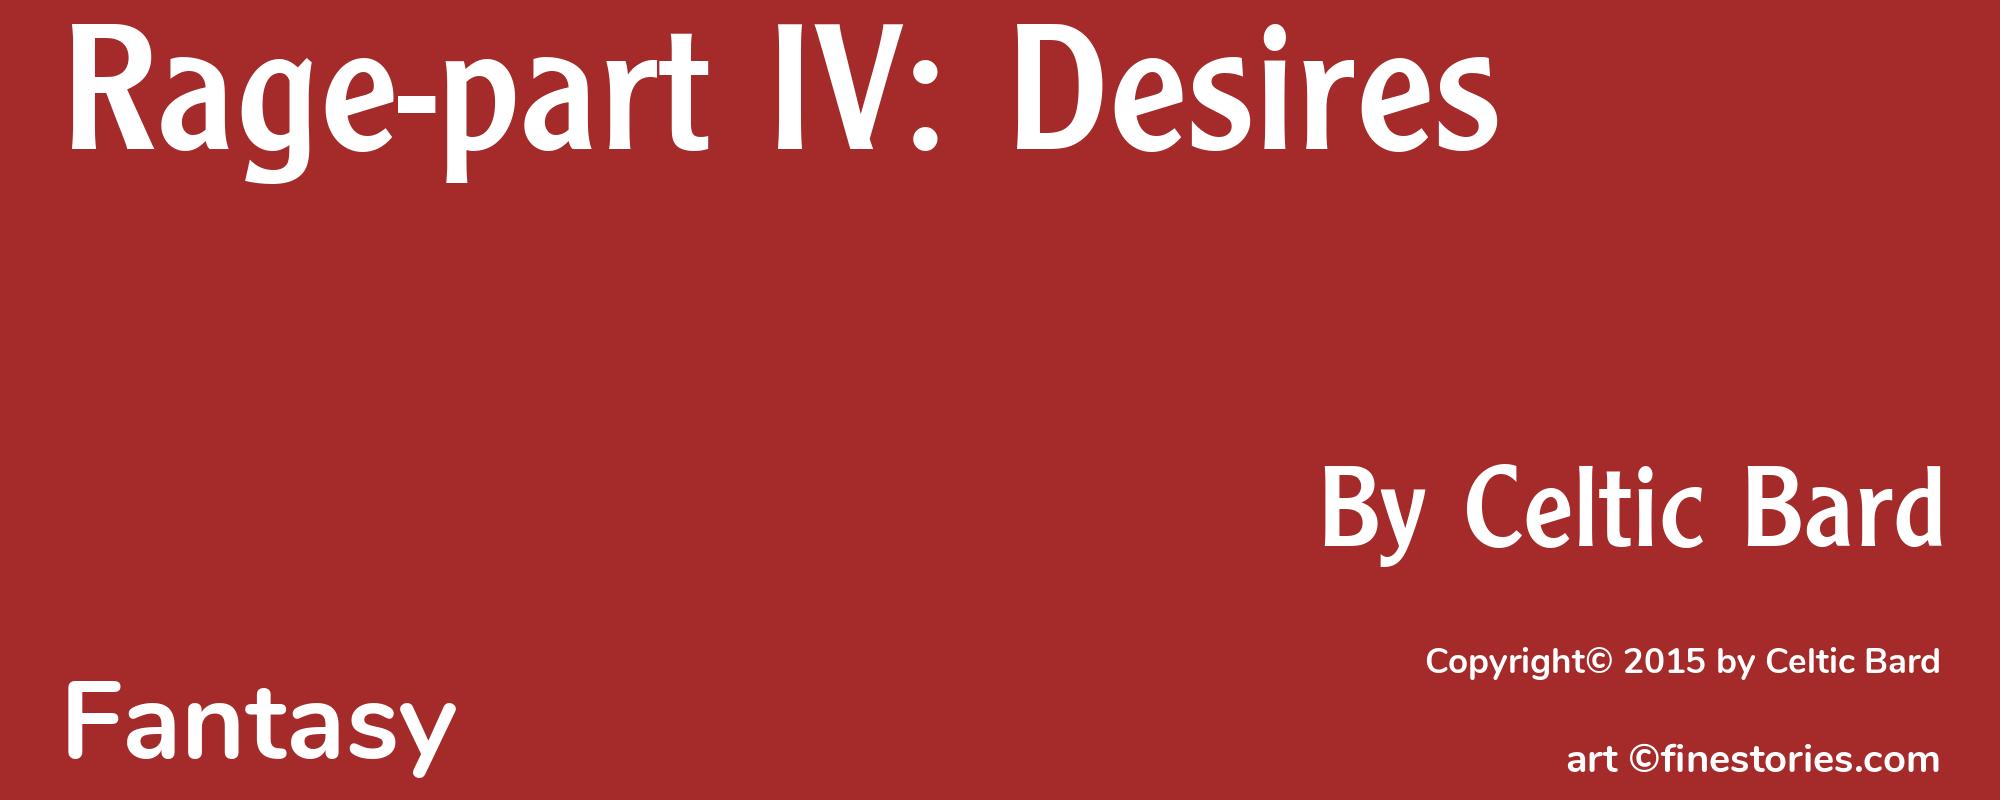 Rage-part IV: Desires - Cover